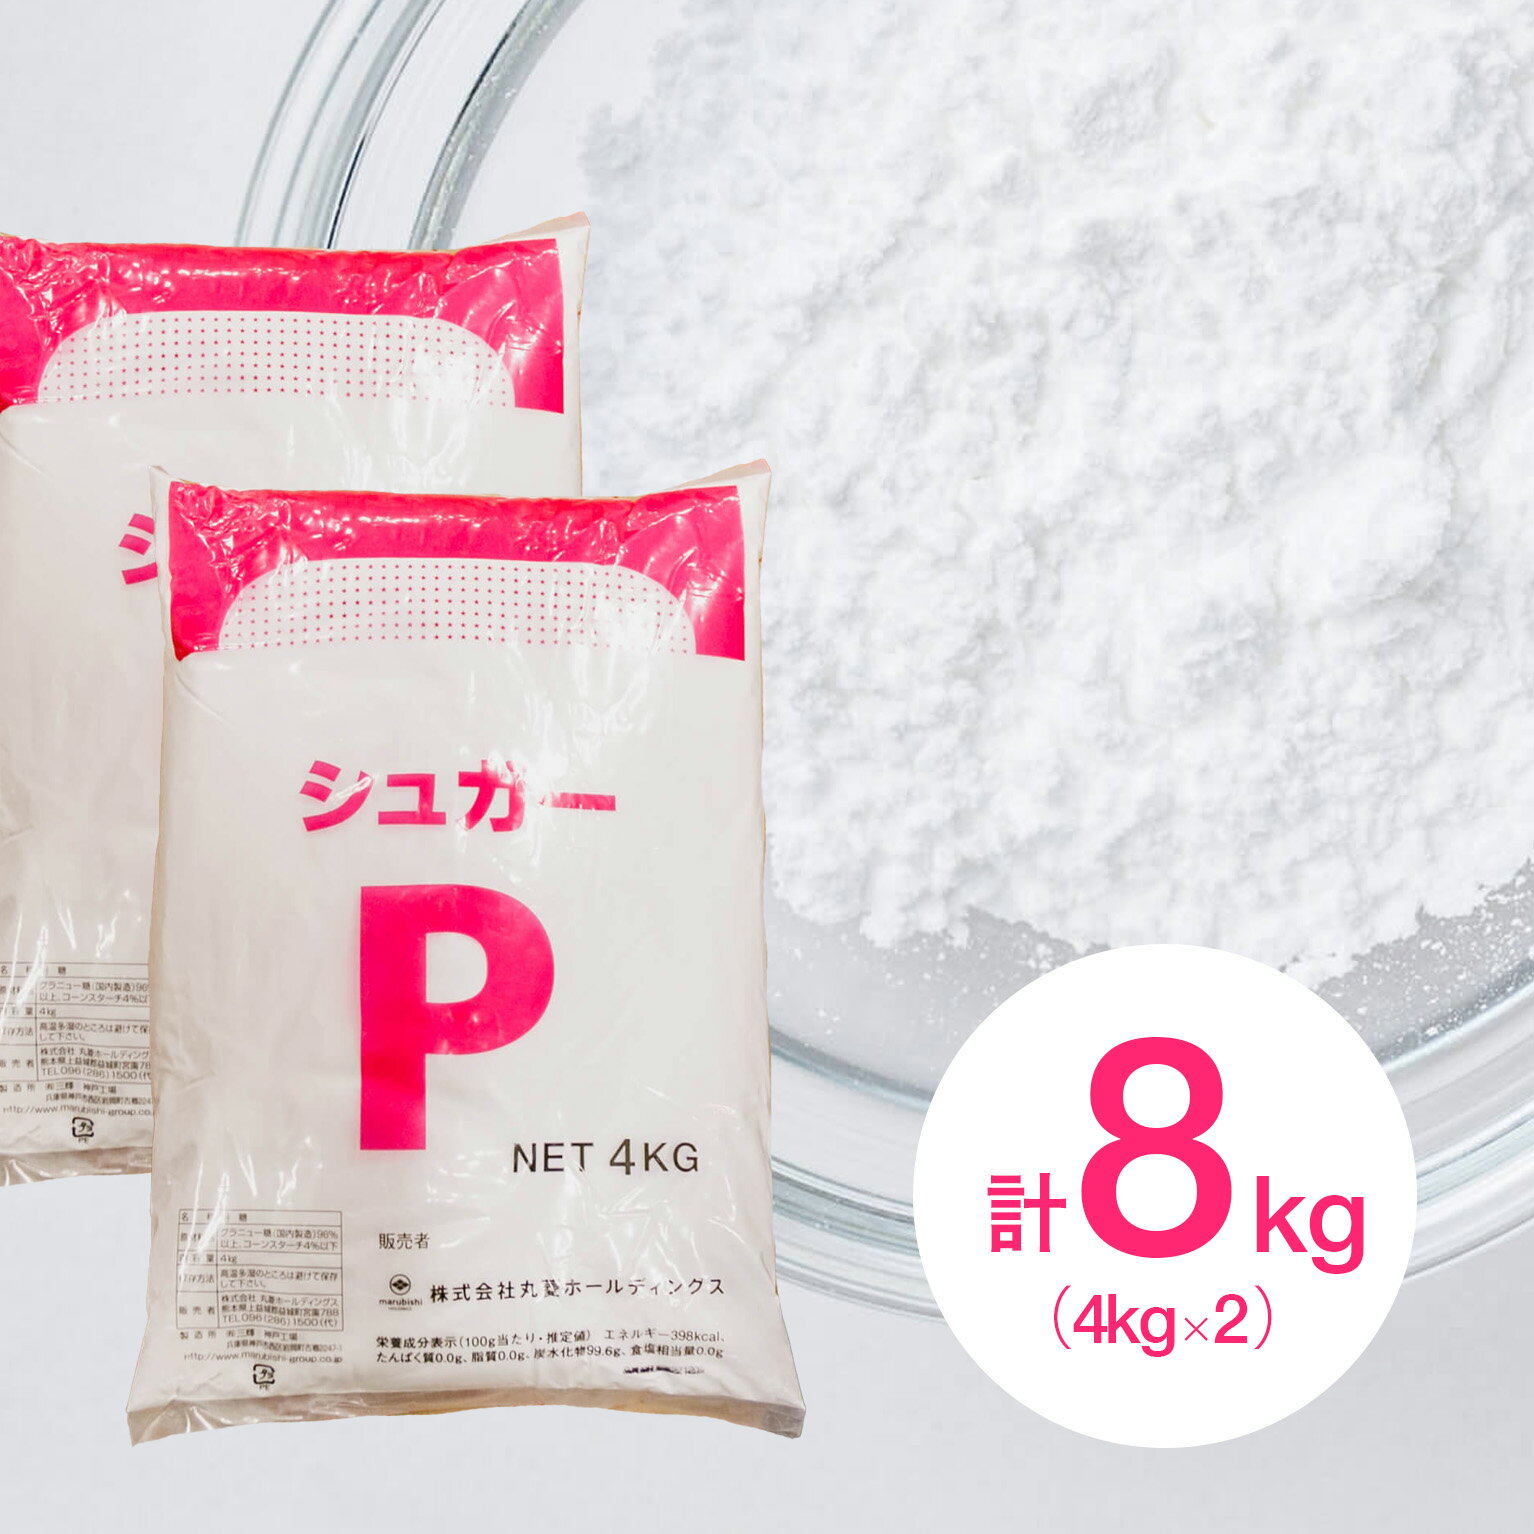 (PB)丸菱 粉糖 シュガーP(パウダーシュガー) 4kg×2個(常温) 業務用グラニュー糖 粉砂糖 粉末 アイシング お菓子 製菓 手作り 材料